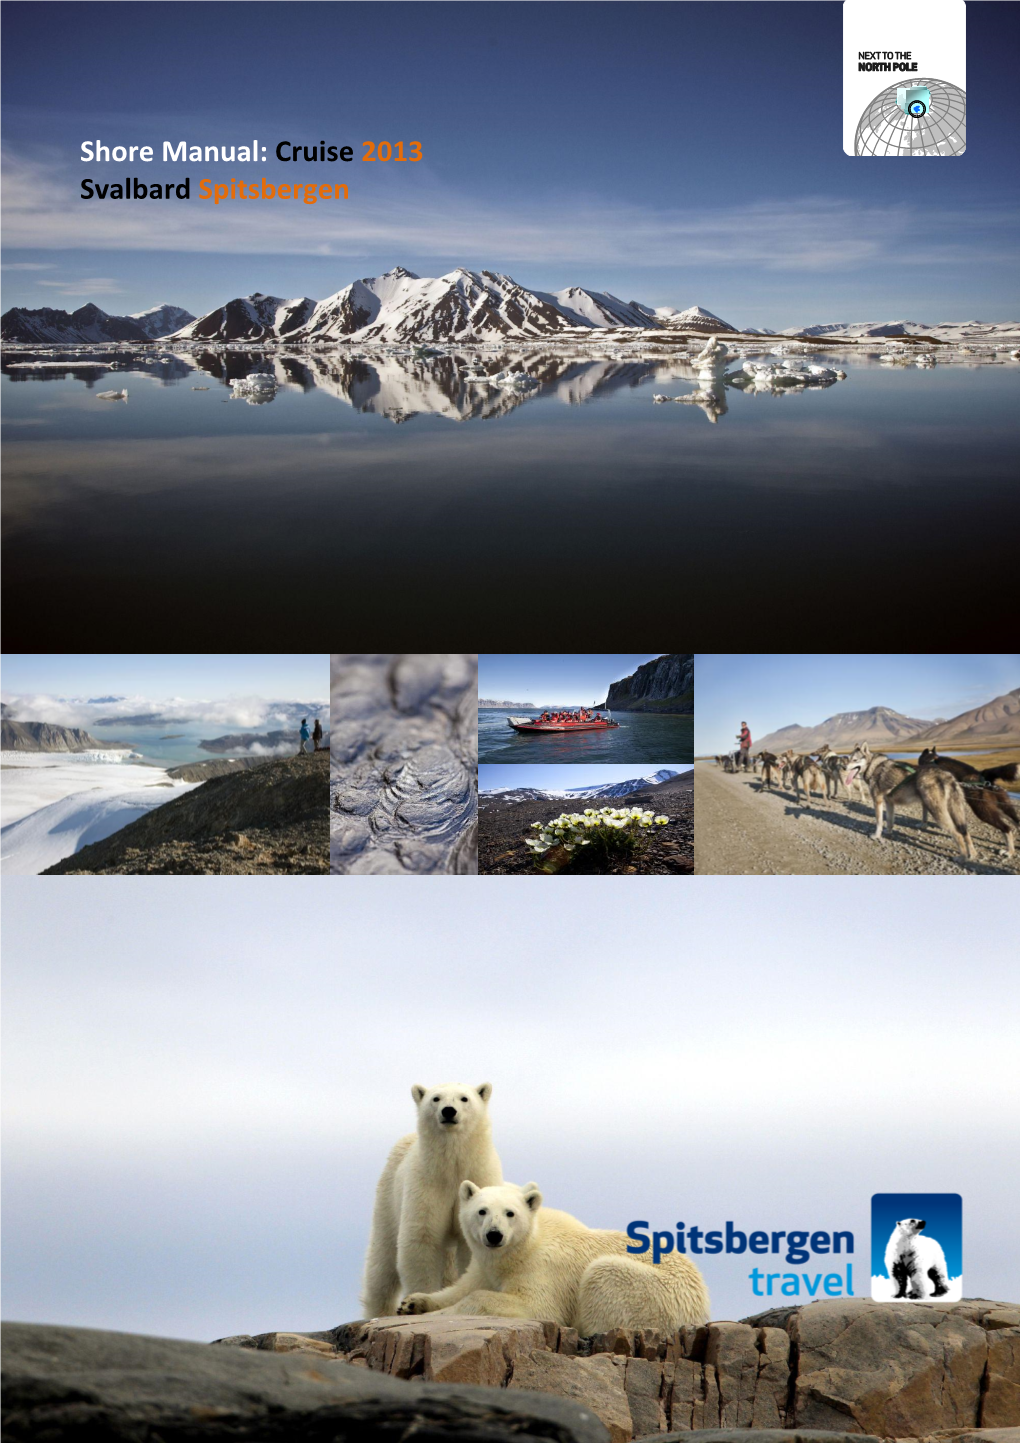 Shore Manual: Cruise 2013 Svalbard Spitsbergen